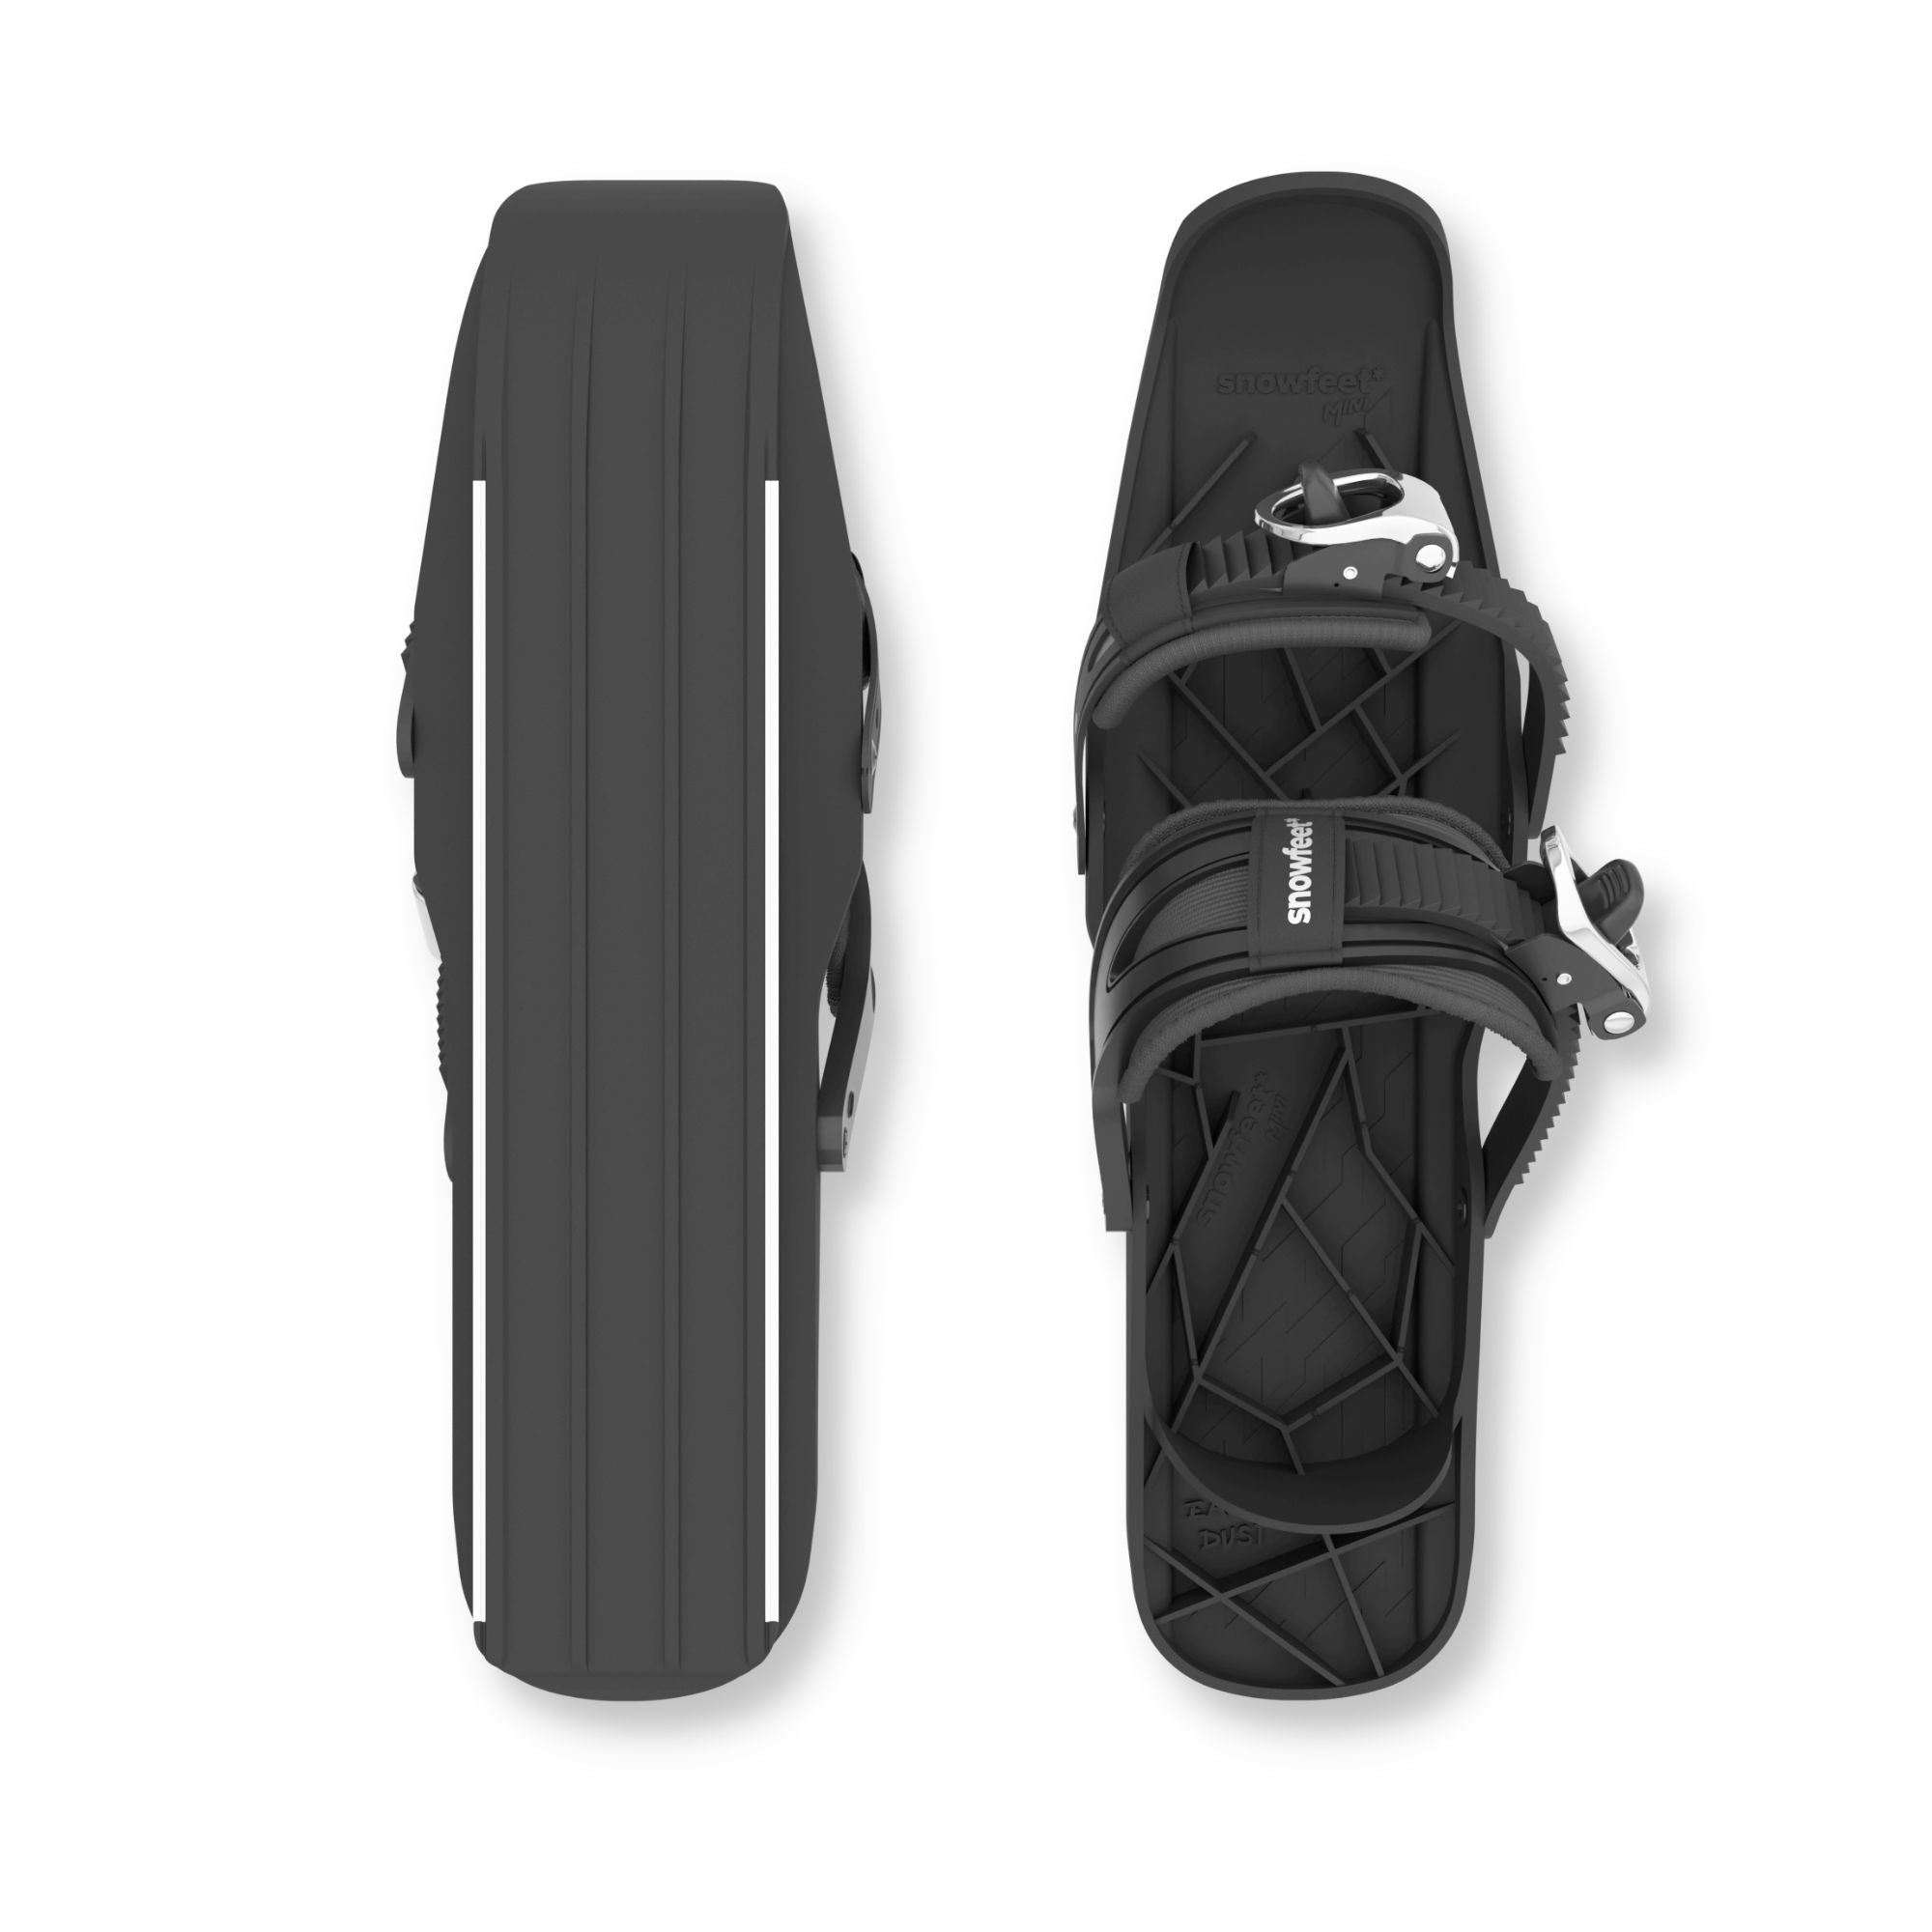 Snowfeet* | Mini Skiskates Short Skis | Secret Sale - snowfeet*